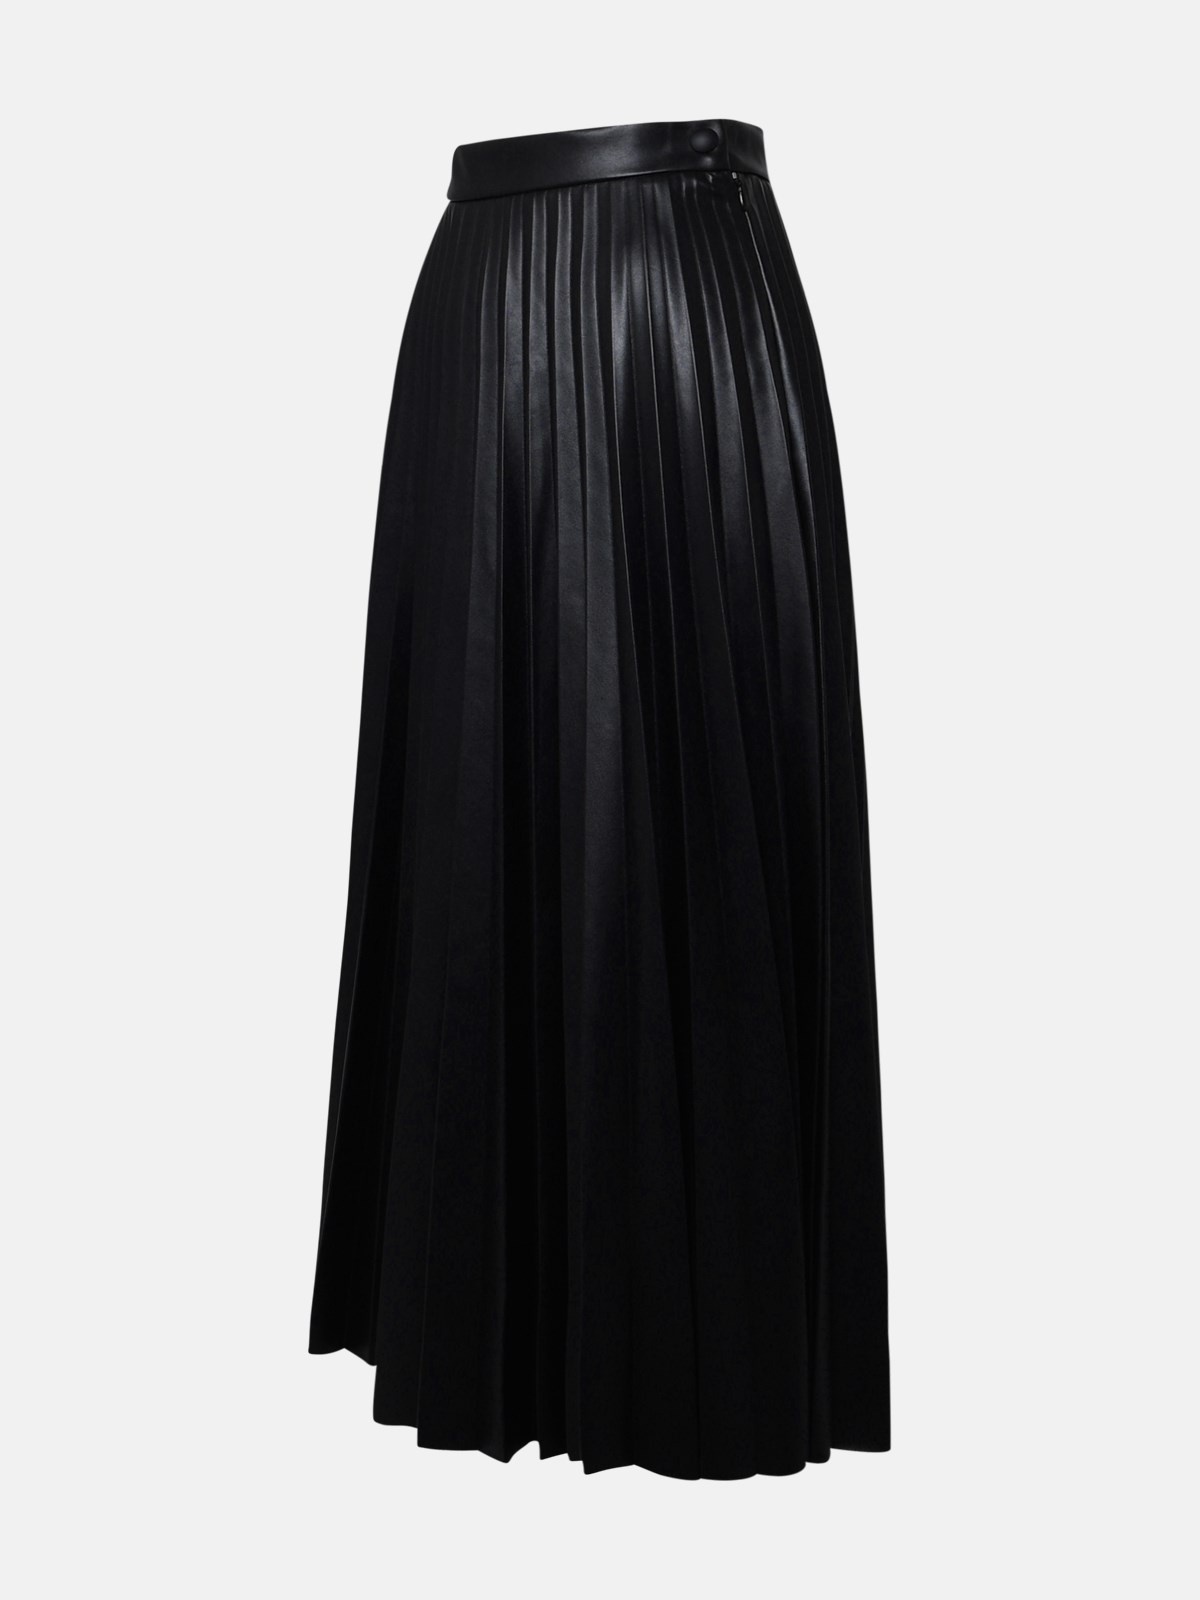 Black leather skirt - 2